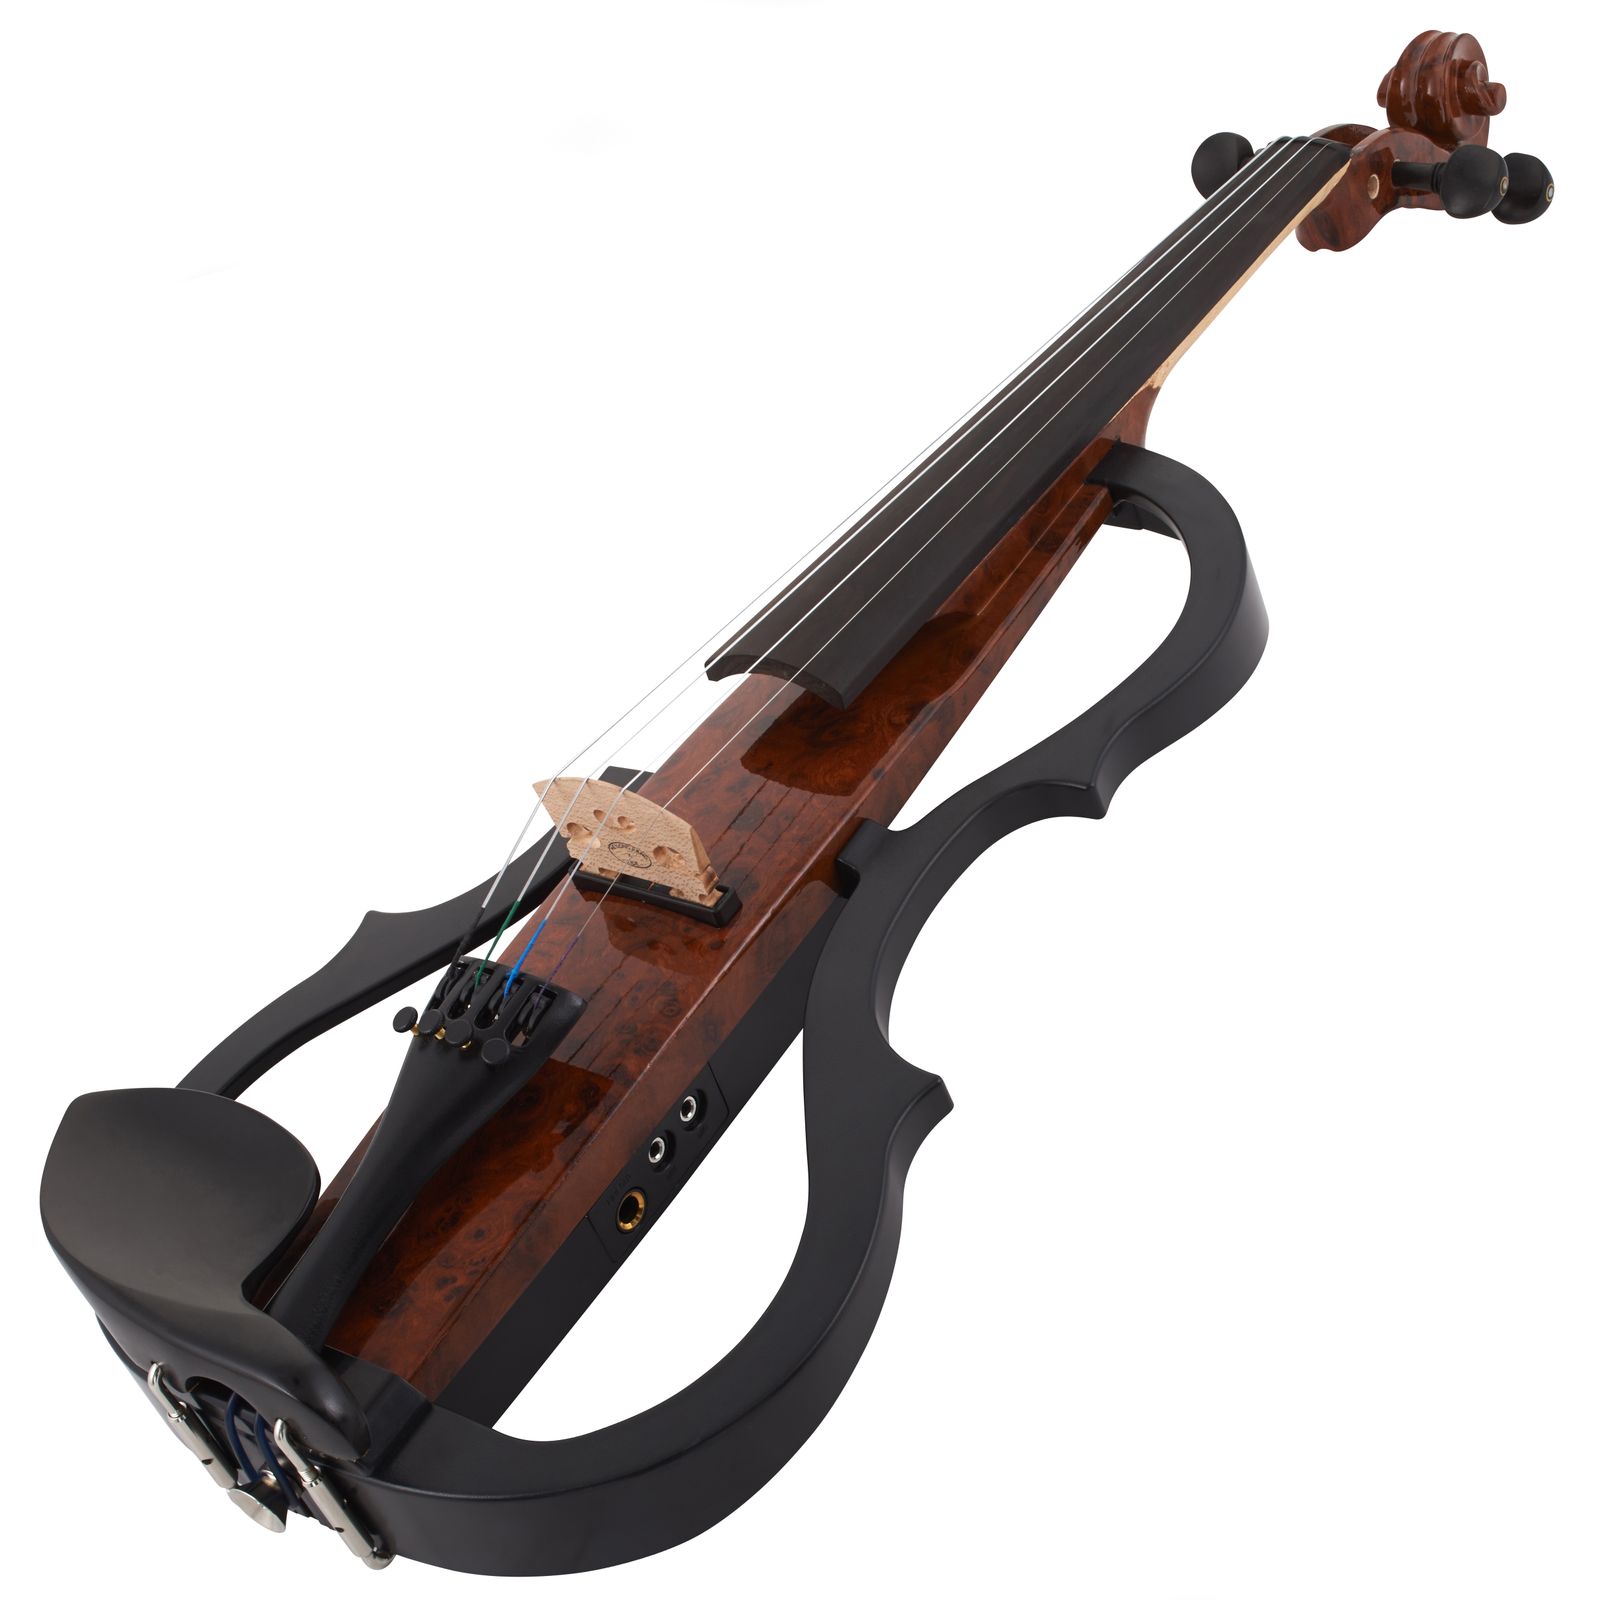 HBV 990AM Electric Violin